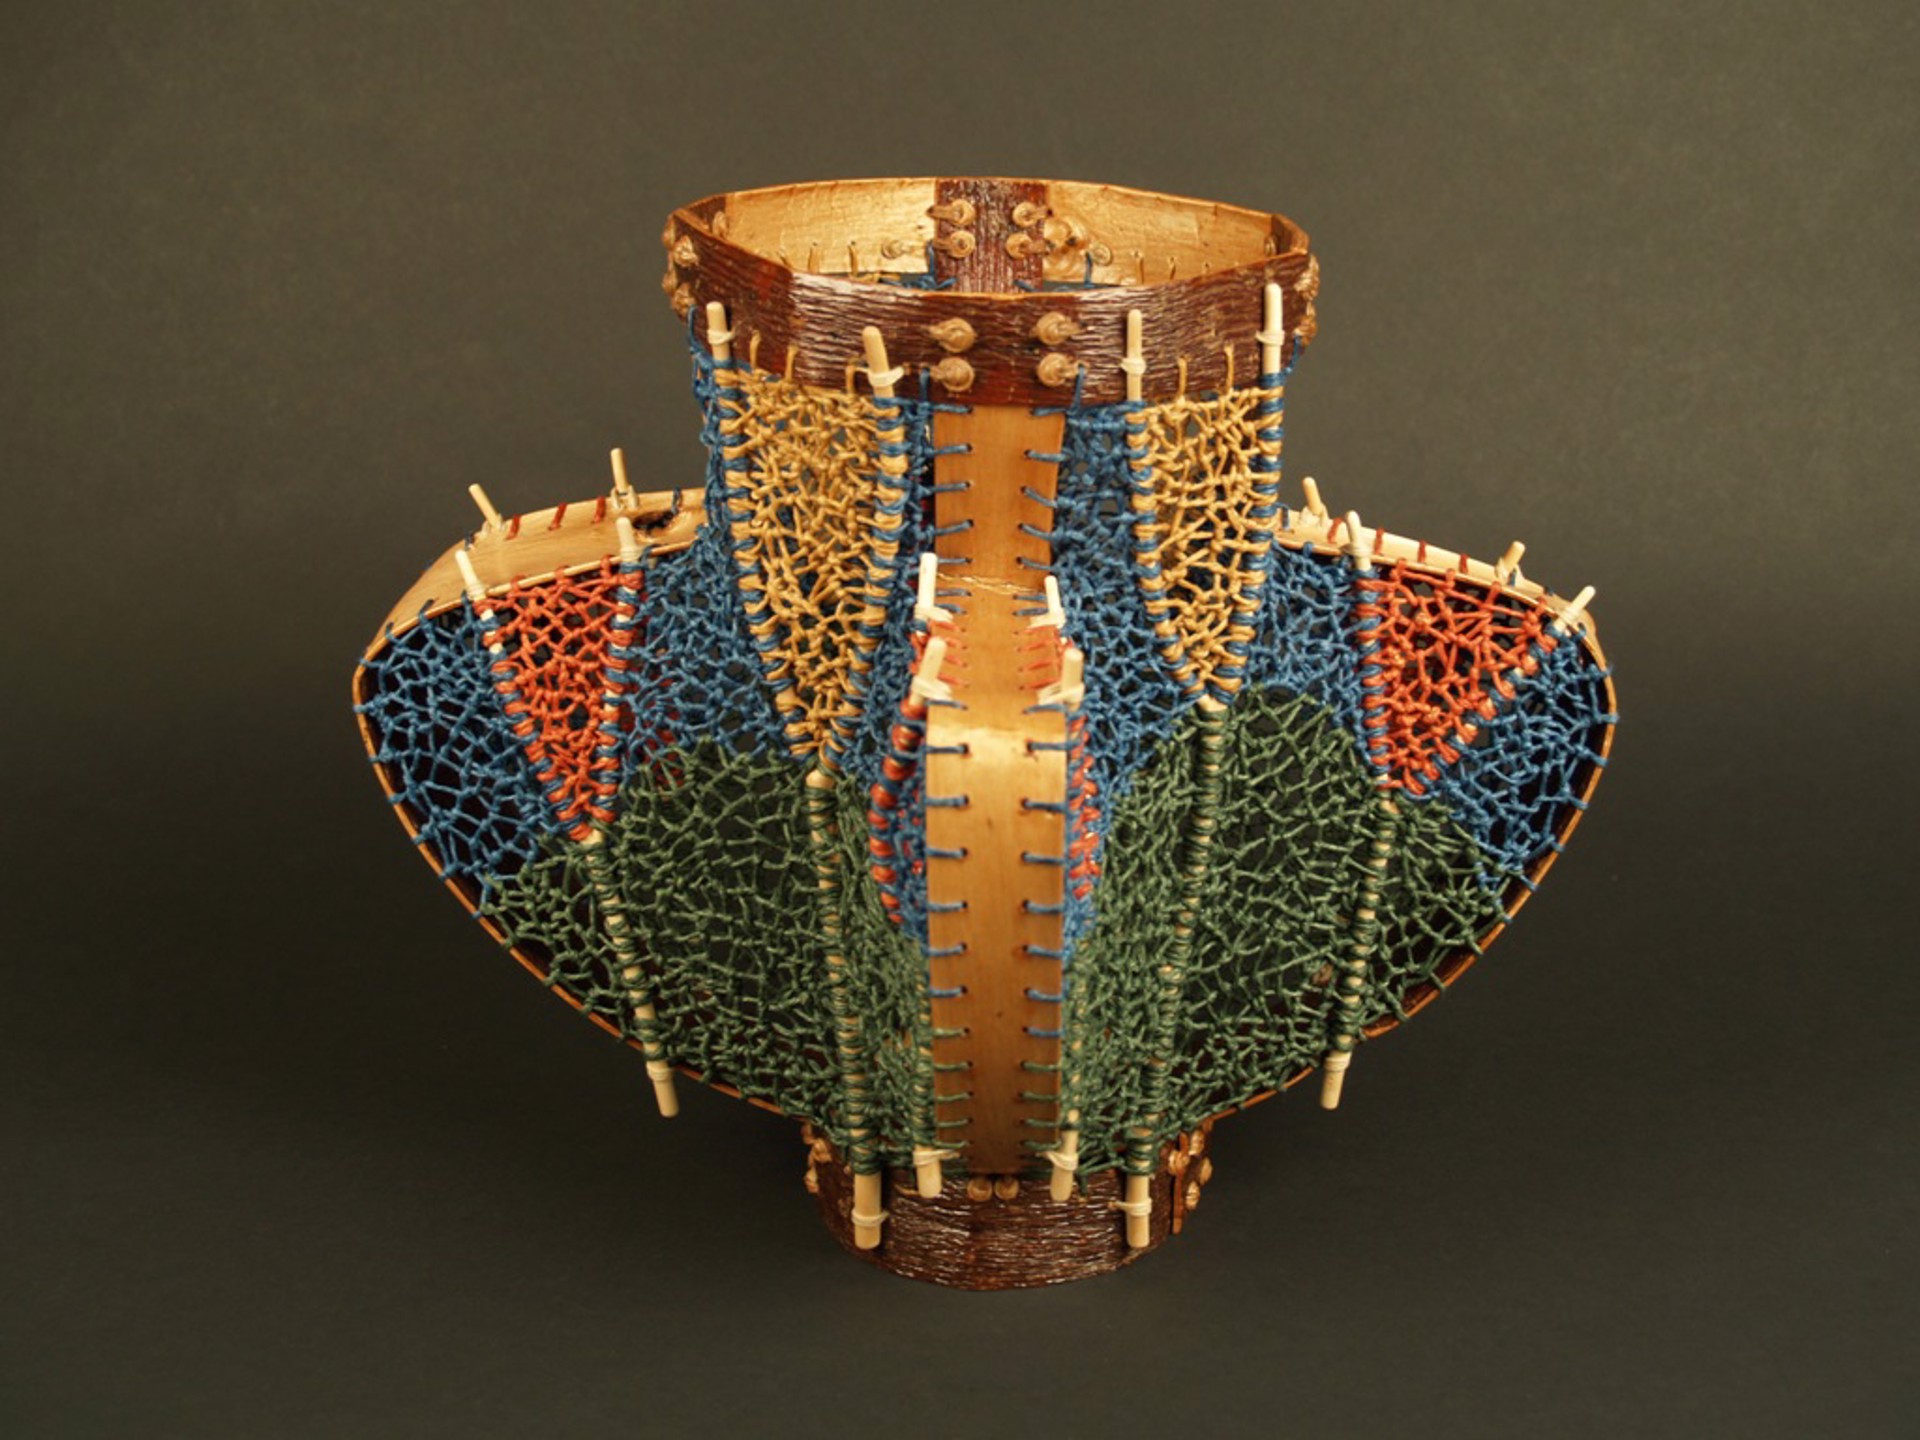 Interlaced Vase by Kim Keats